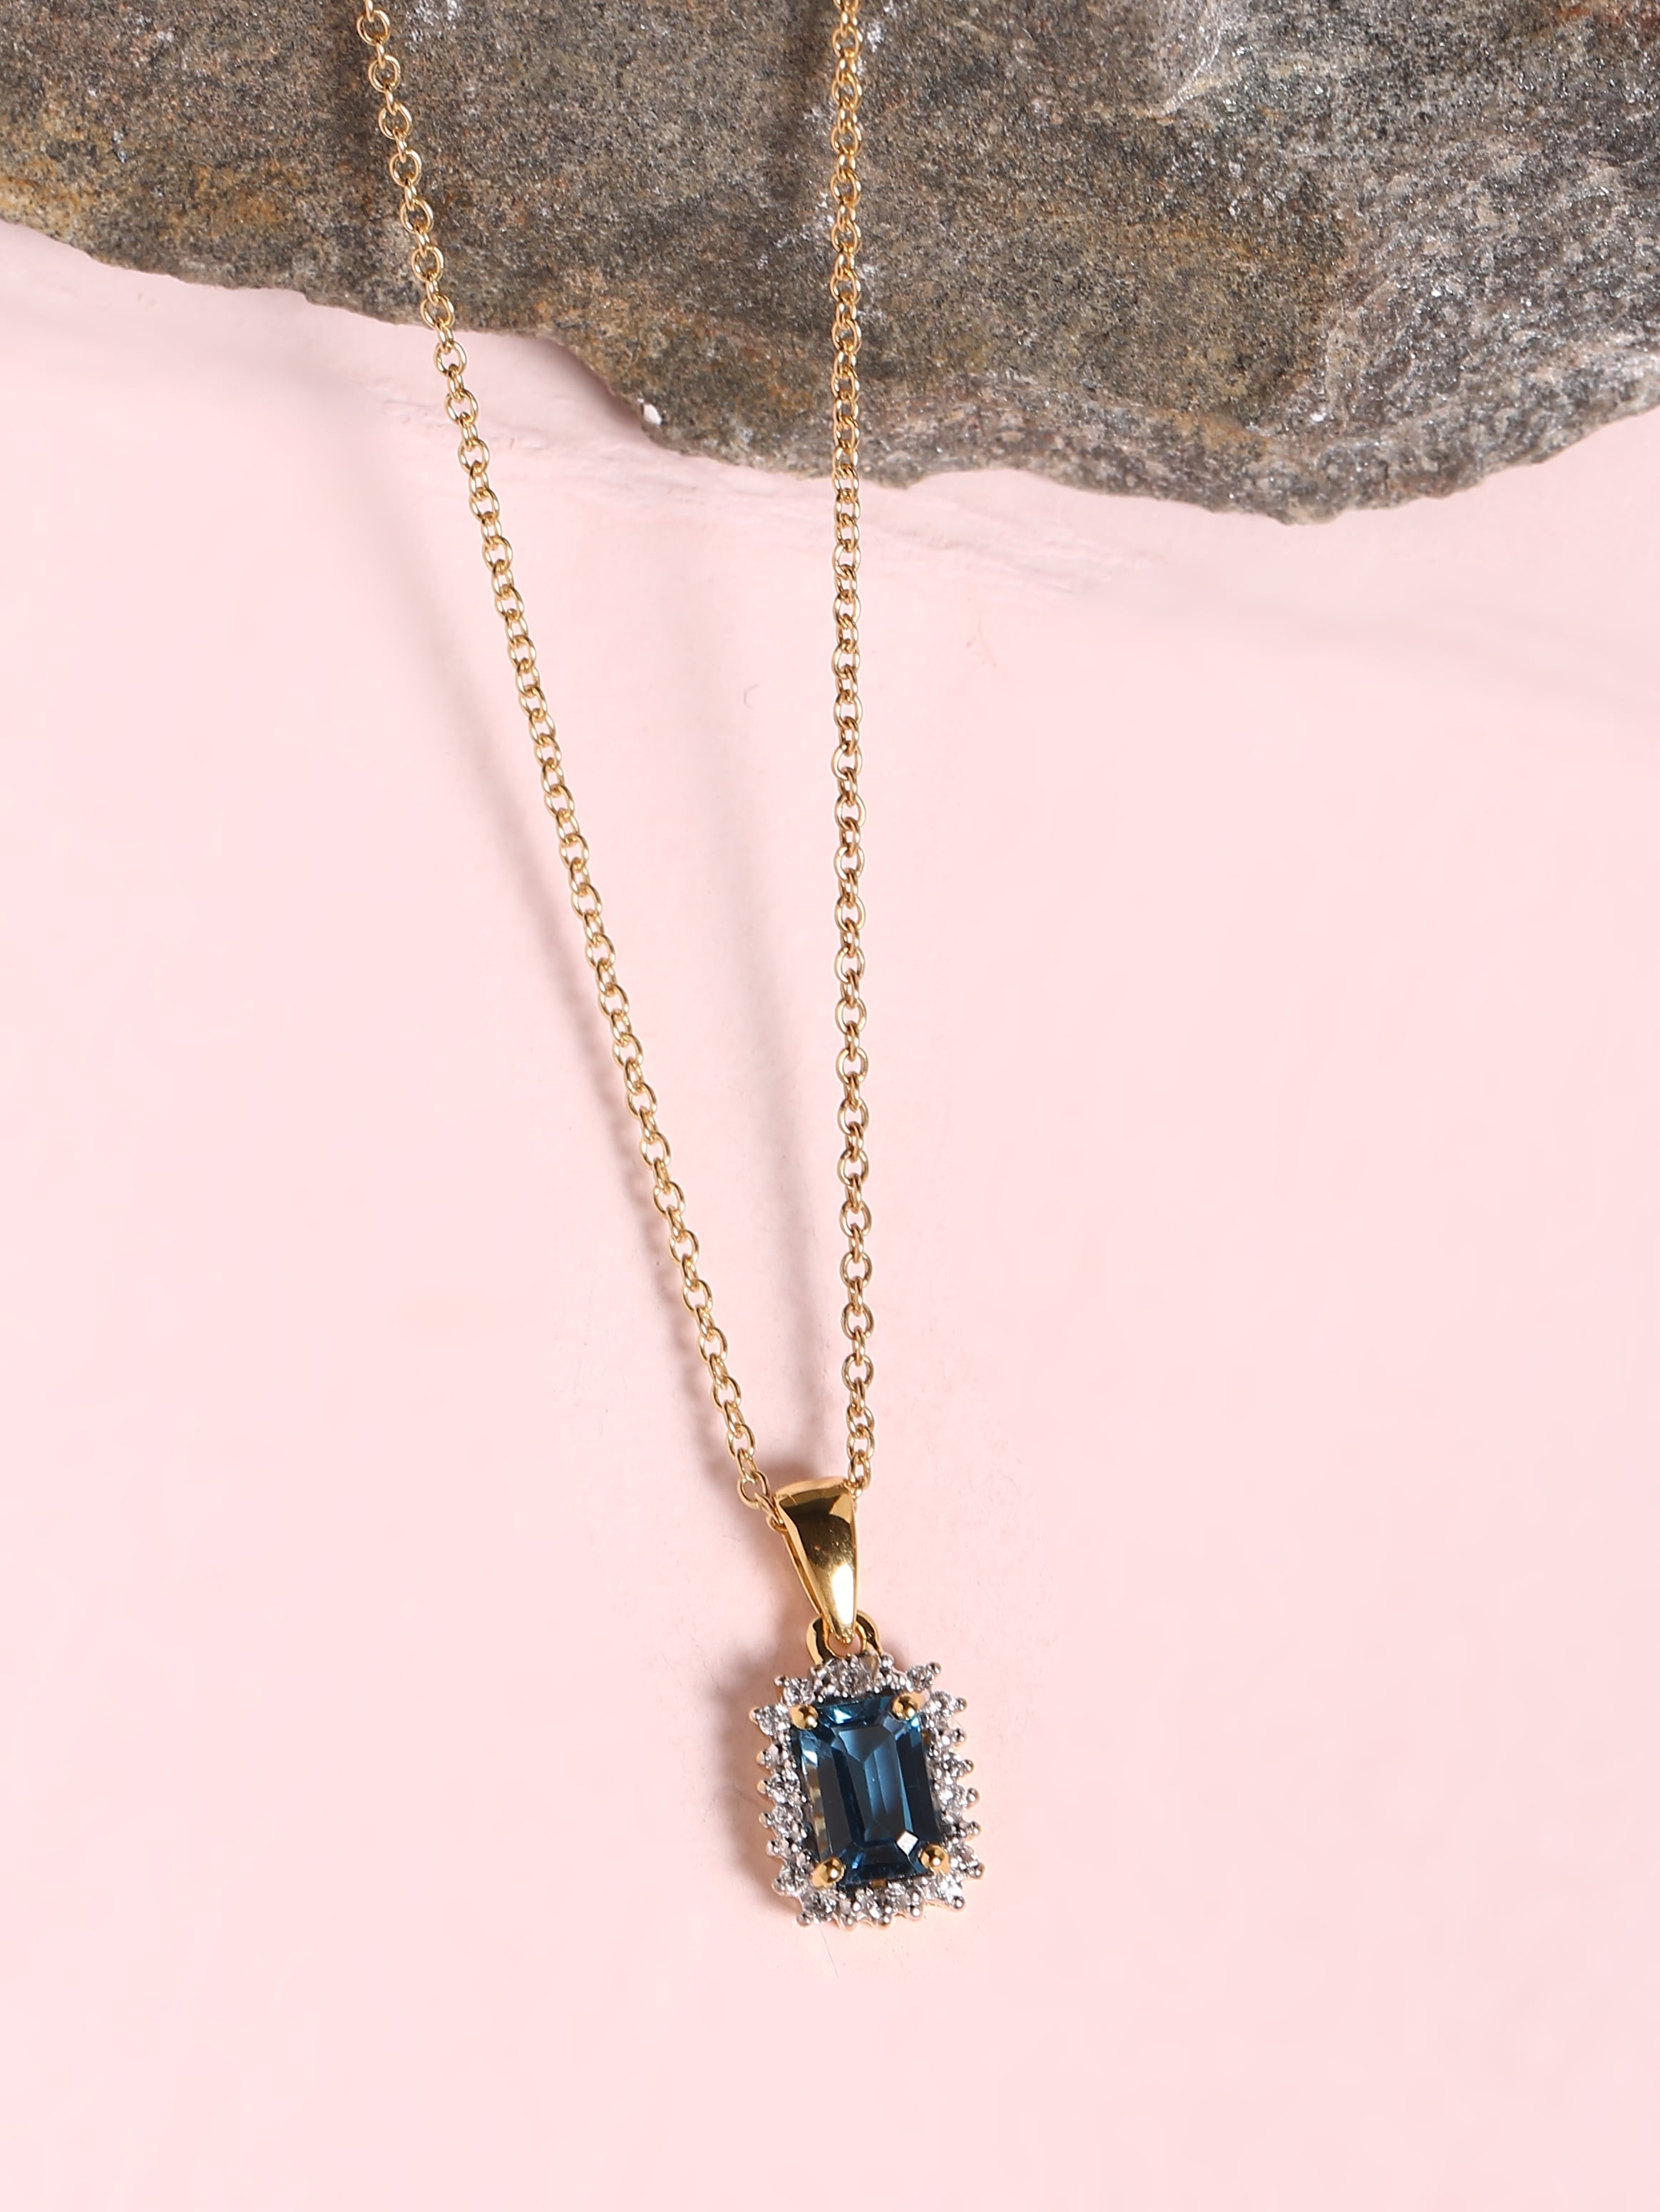 Genuine Crystal Quartz Gold Plated Pendant For Women Bullet Shape Charms Astrological Necklace Handmade 